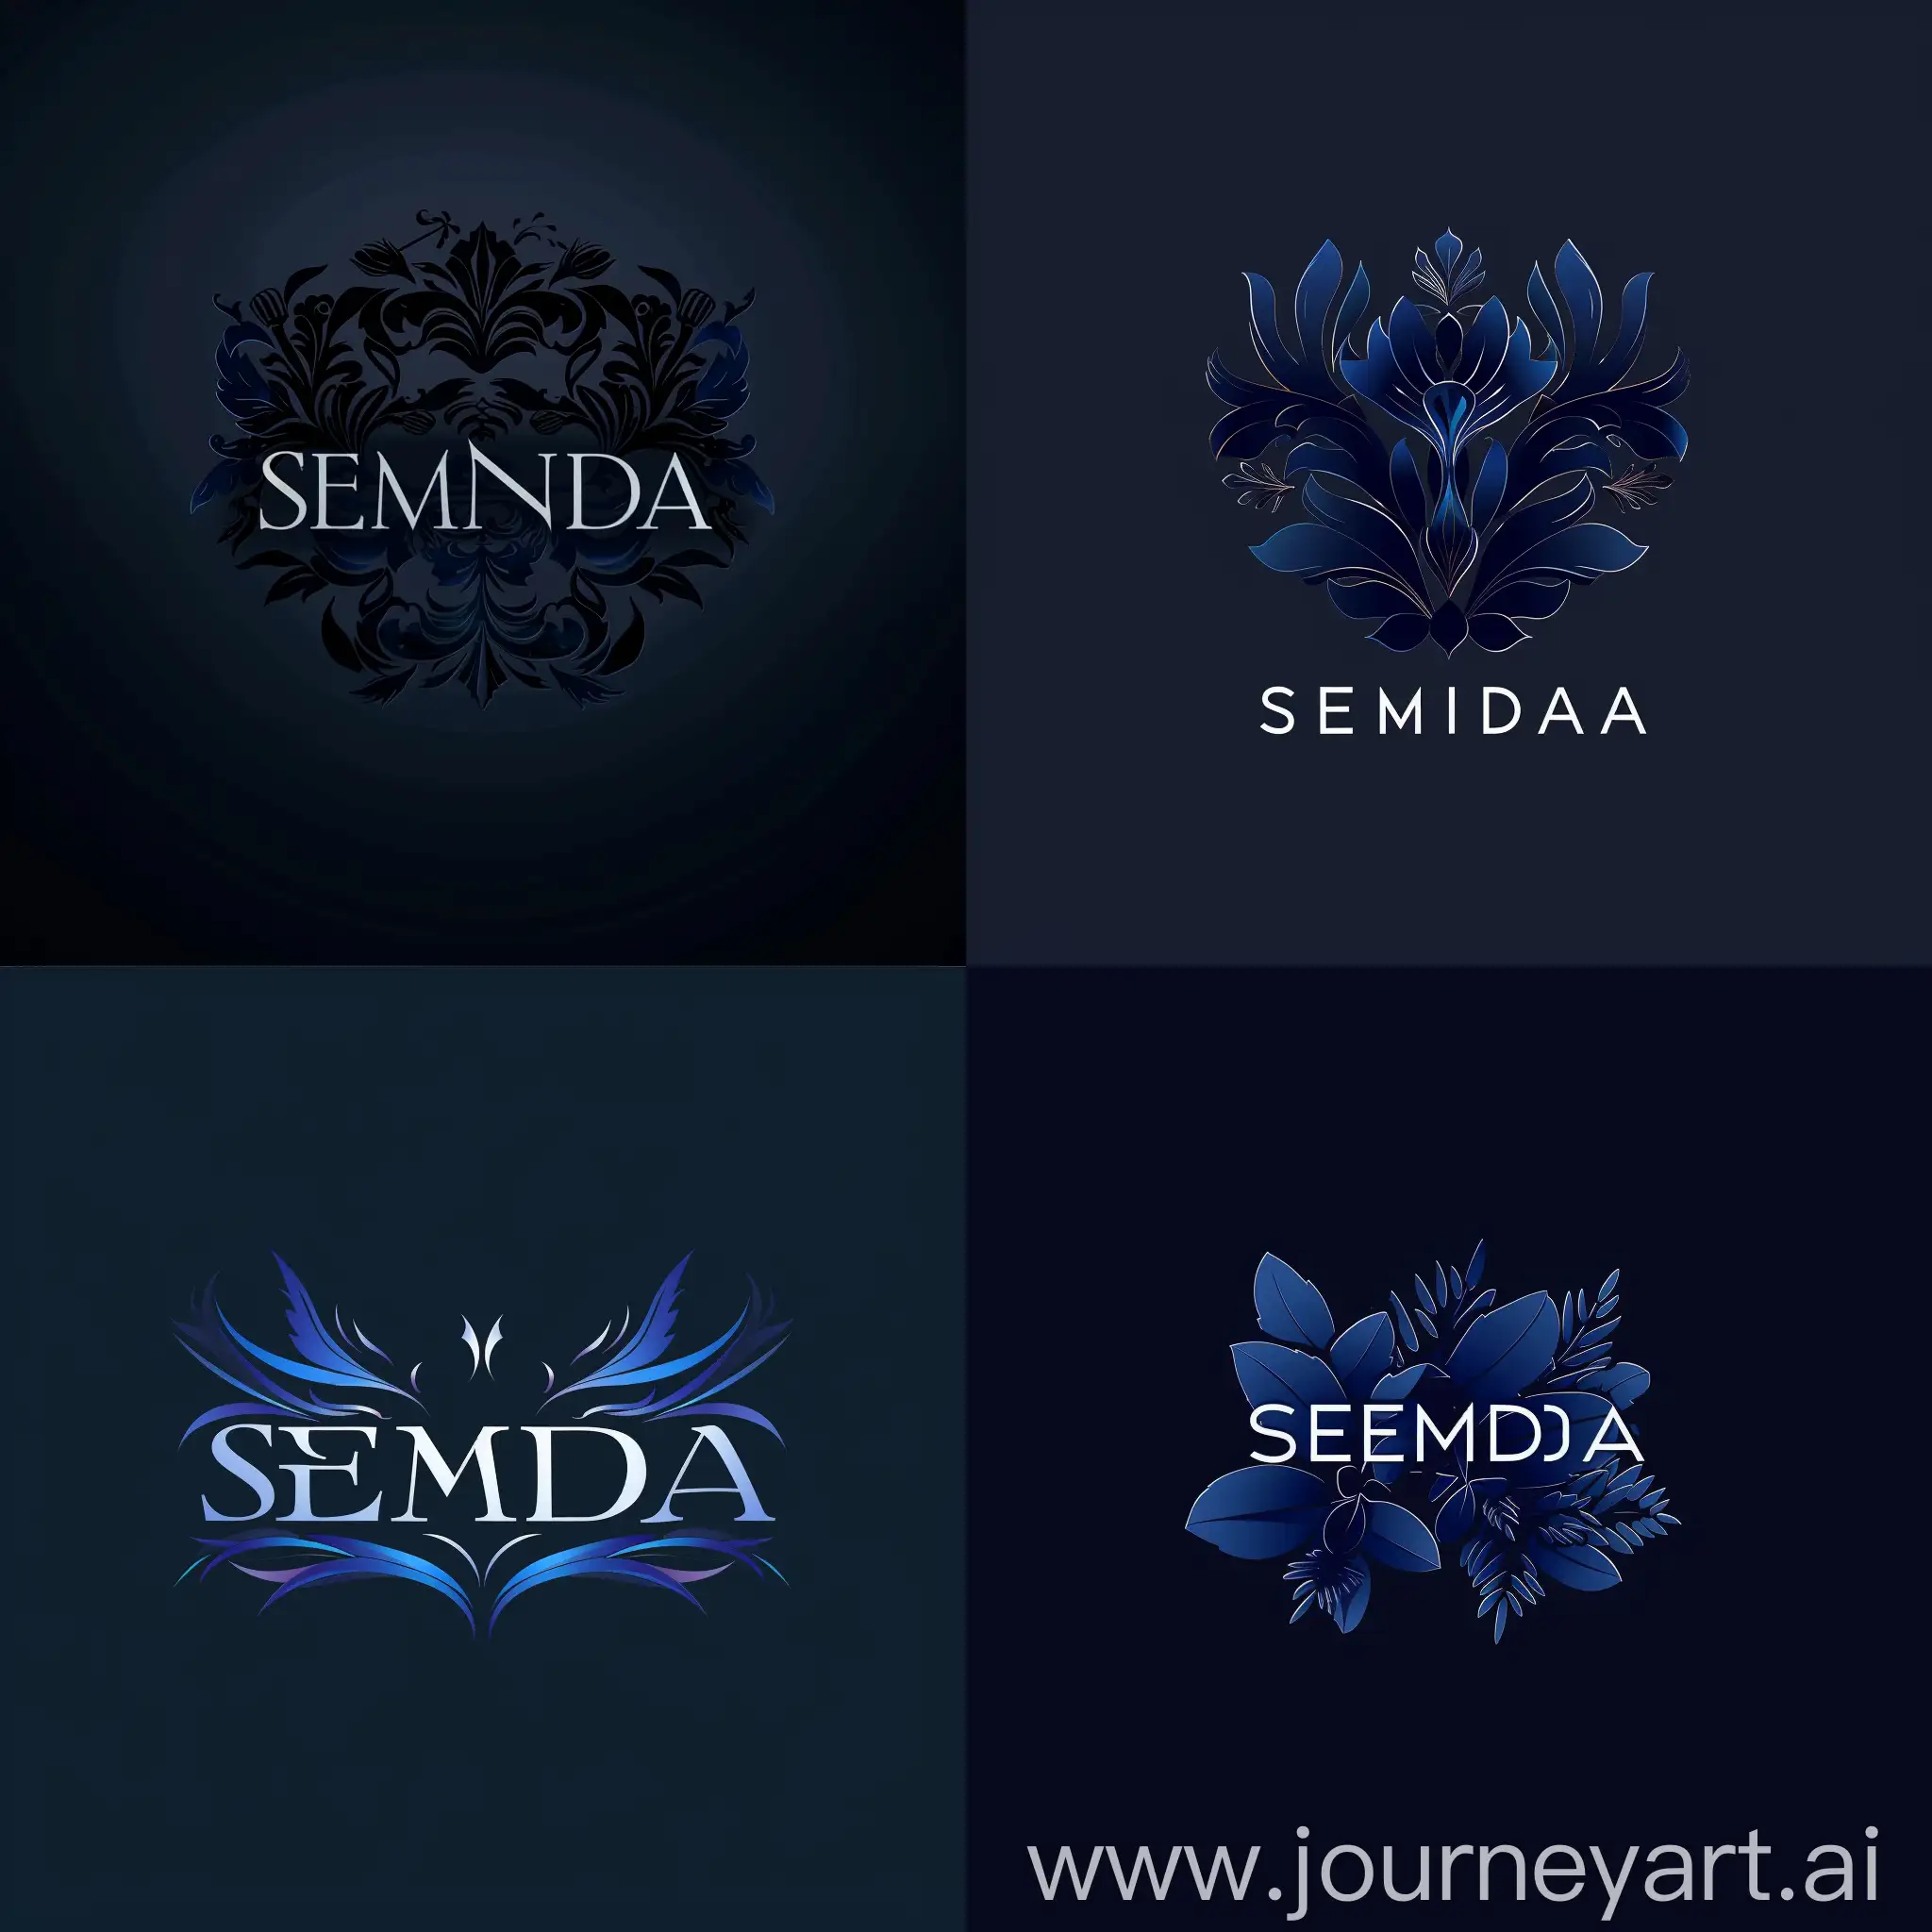 Elegant-and-Dashing-SEMUDA-Logo-for-Games-Films-and-Comics